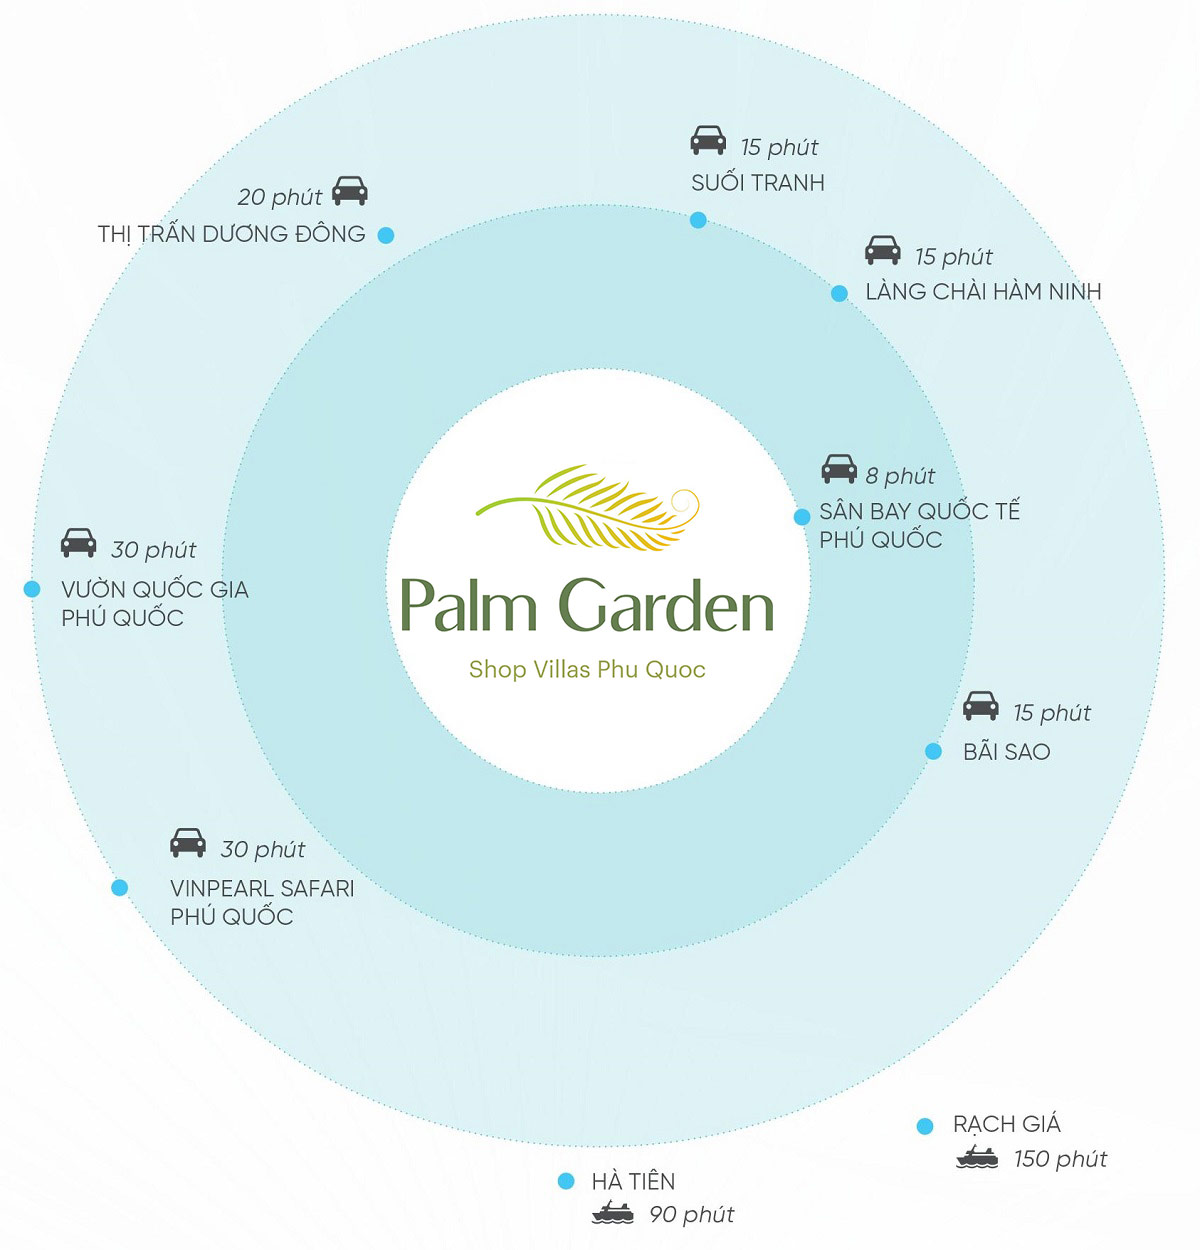 Palm Garden Shop Villas Phú Quốc